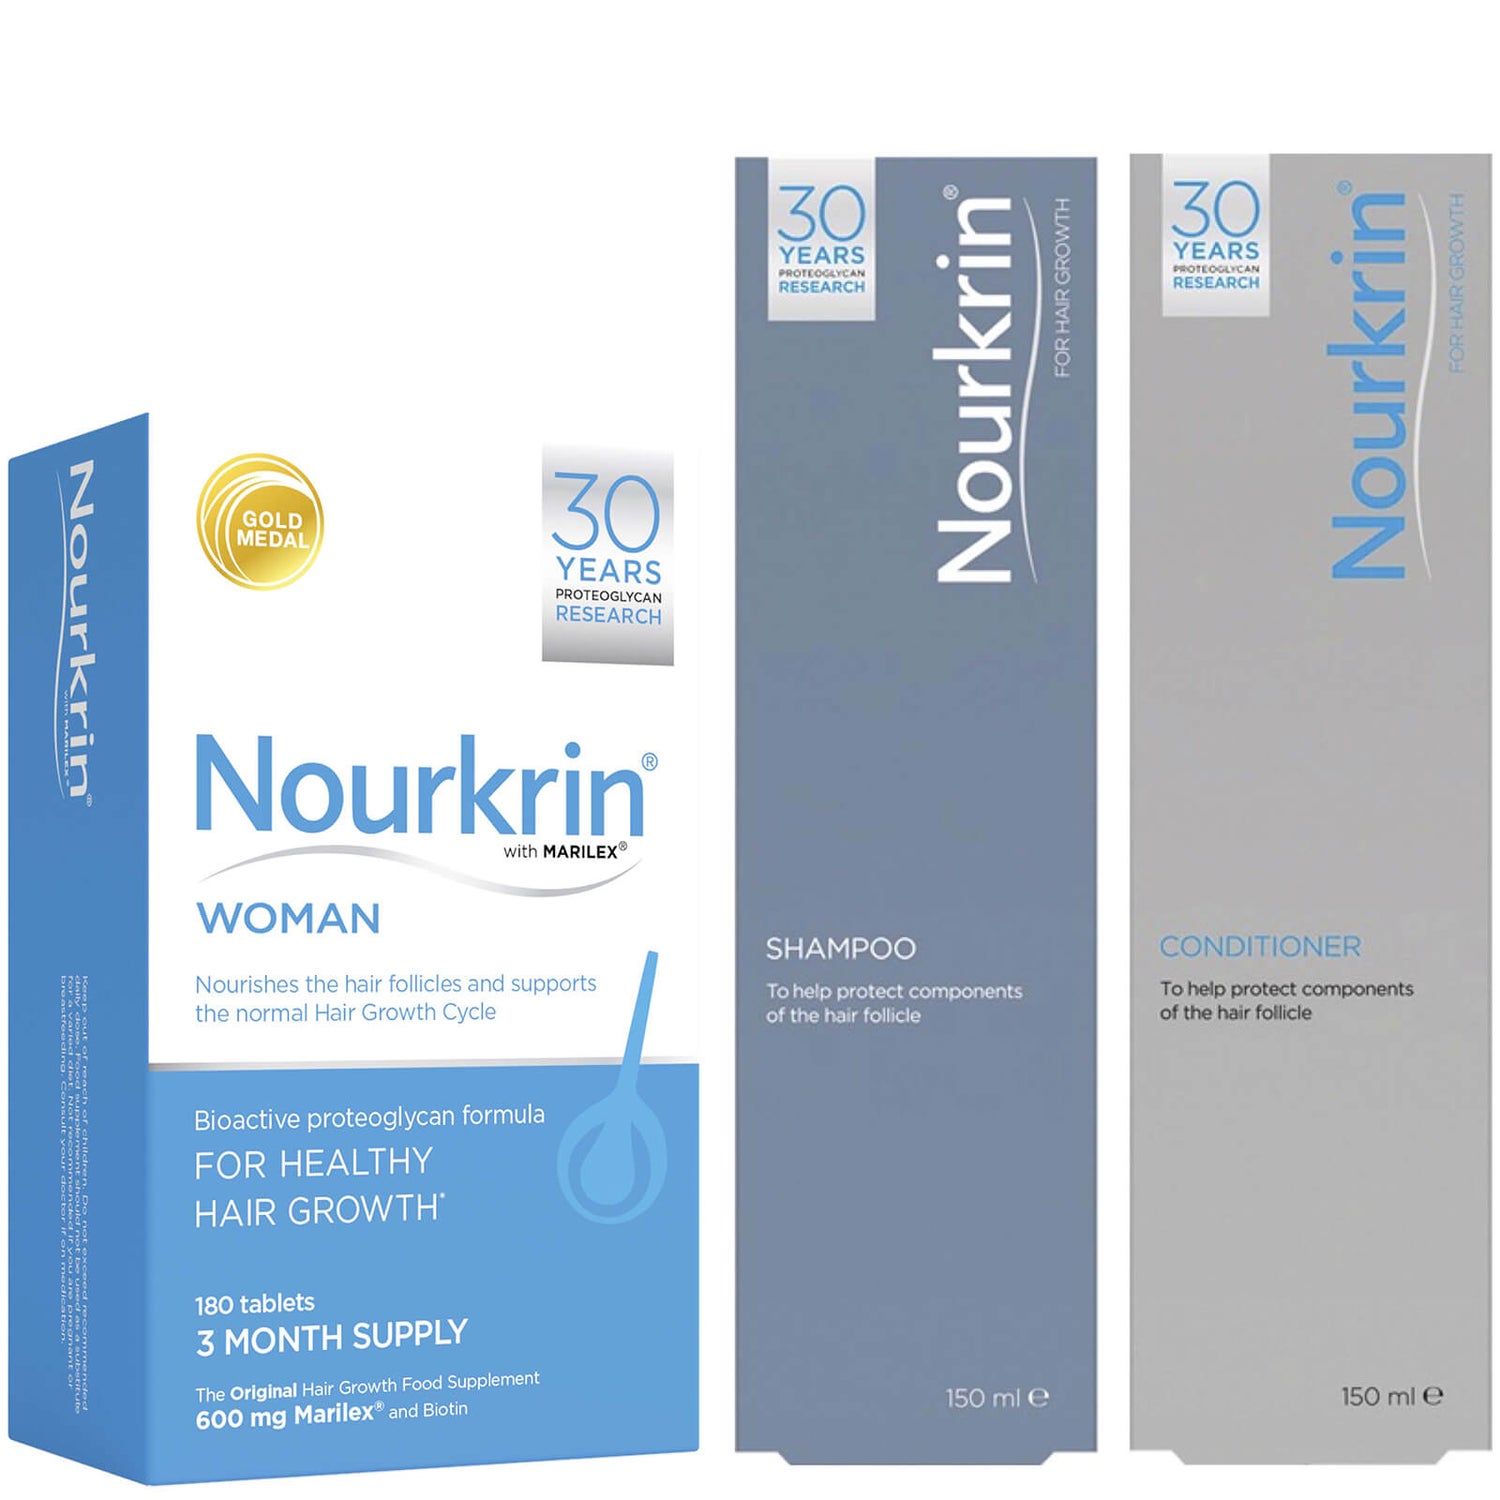 Nourkrin Woman Value Pack(놀크린 우먼 밸류 팩 - 180정, 샴푸, 컨디셔너 2x150ml 포함)